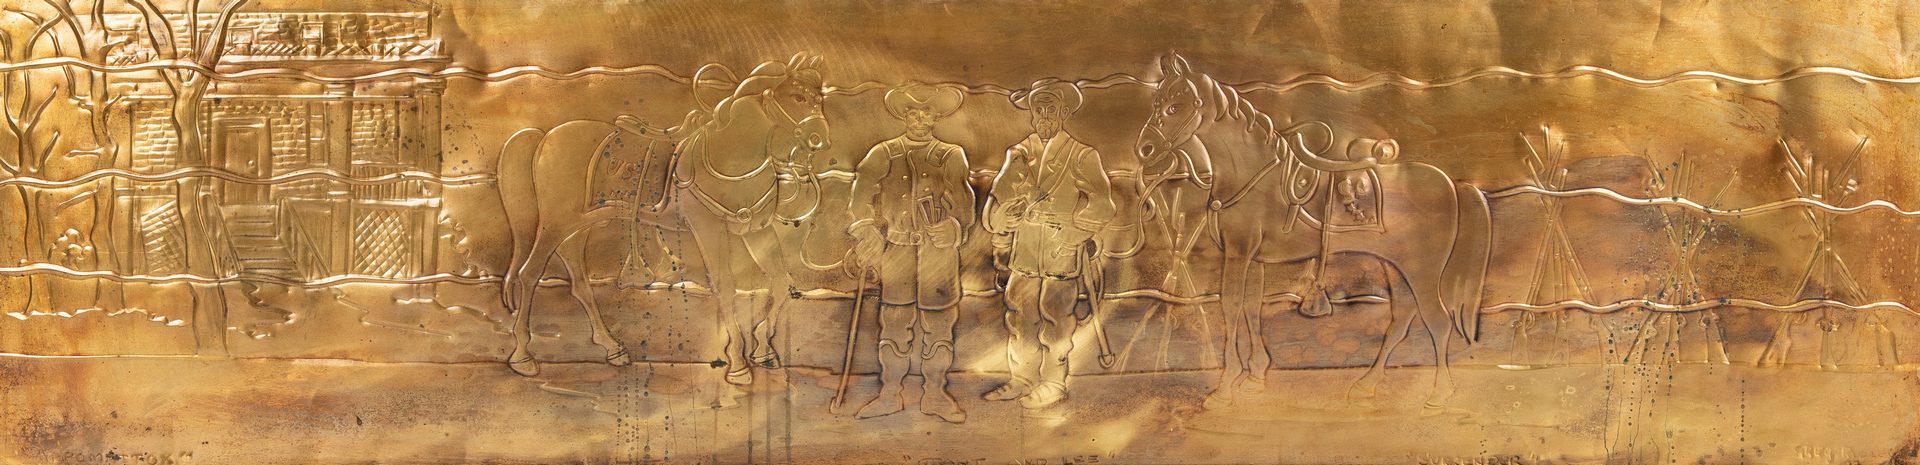 Lot 516: Greg Ridley Gilt Copper Panel, Appomattox Surrender